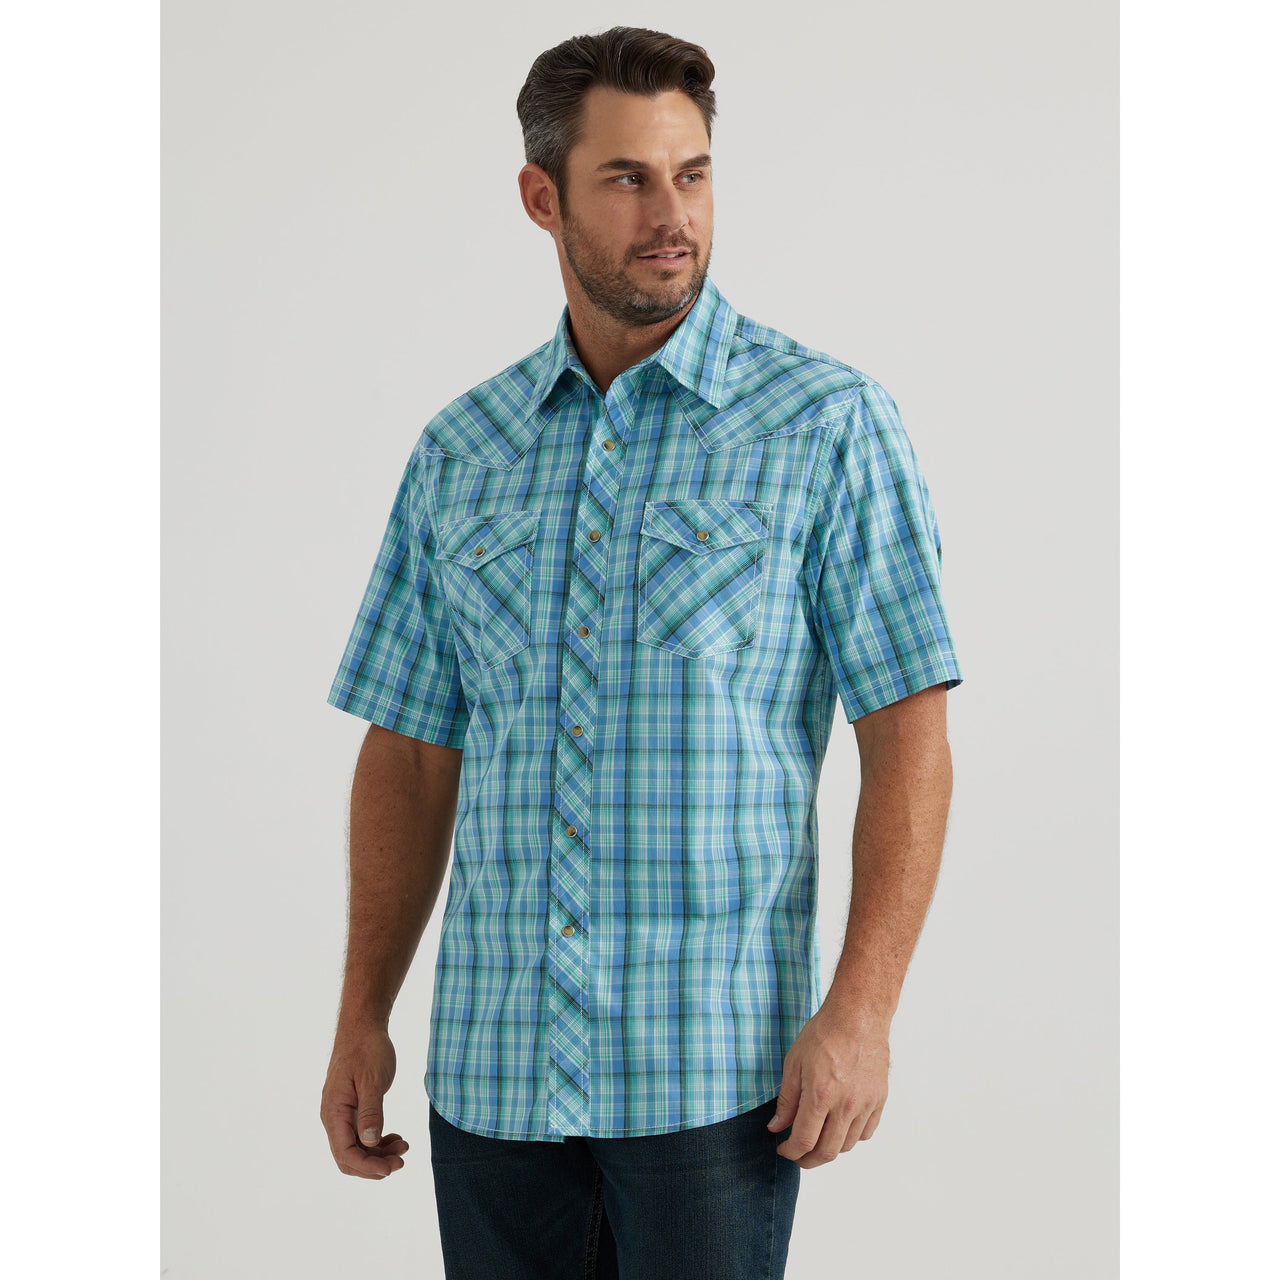 Wrangler Men's 20X Advanced Comfort Short Sleeve Plaid Snap Shirt - Teal